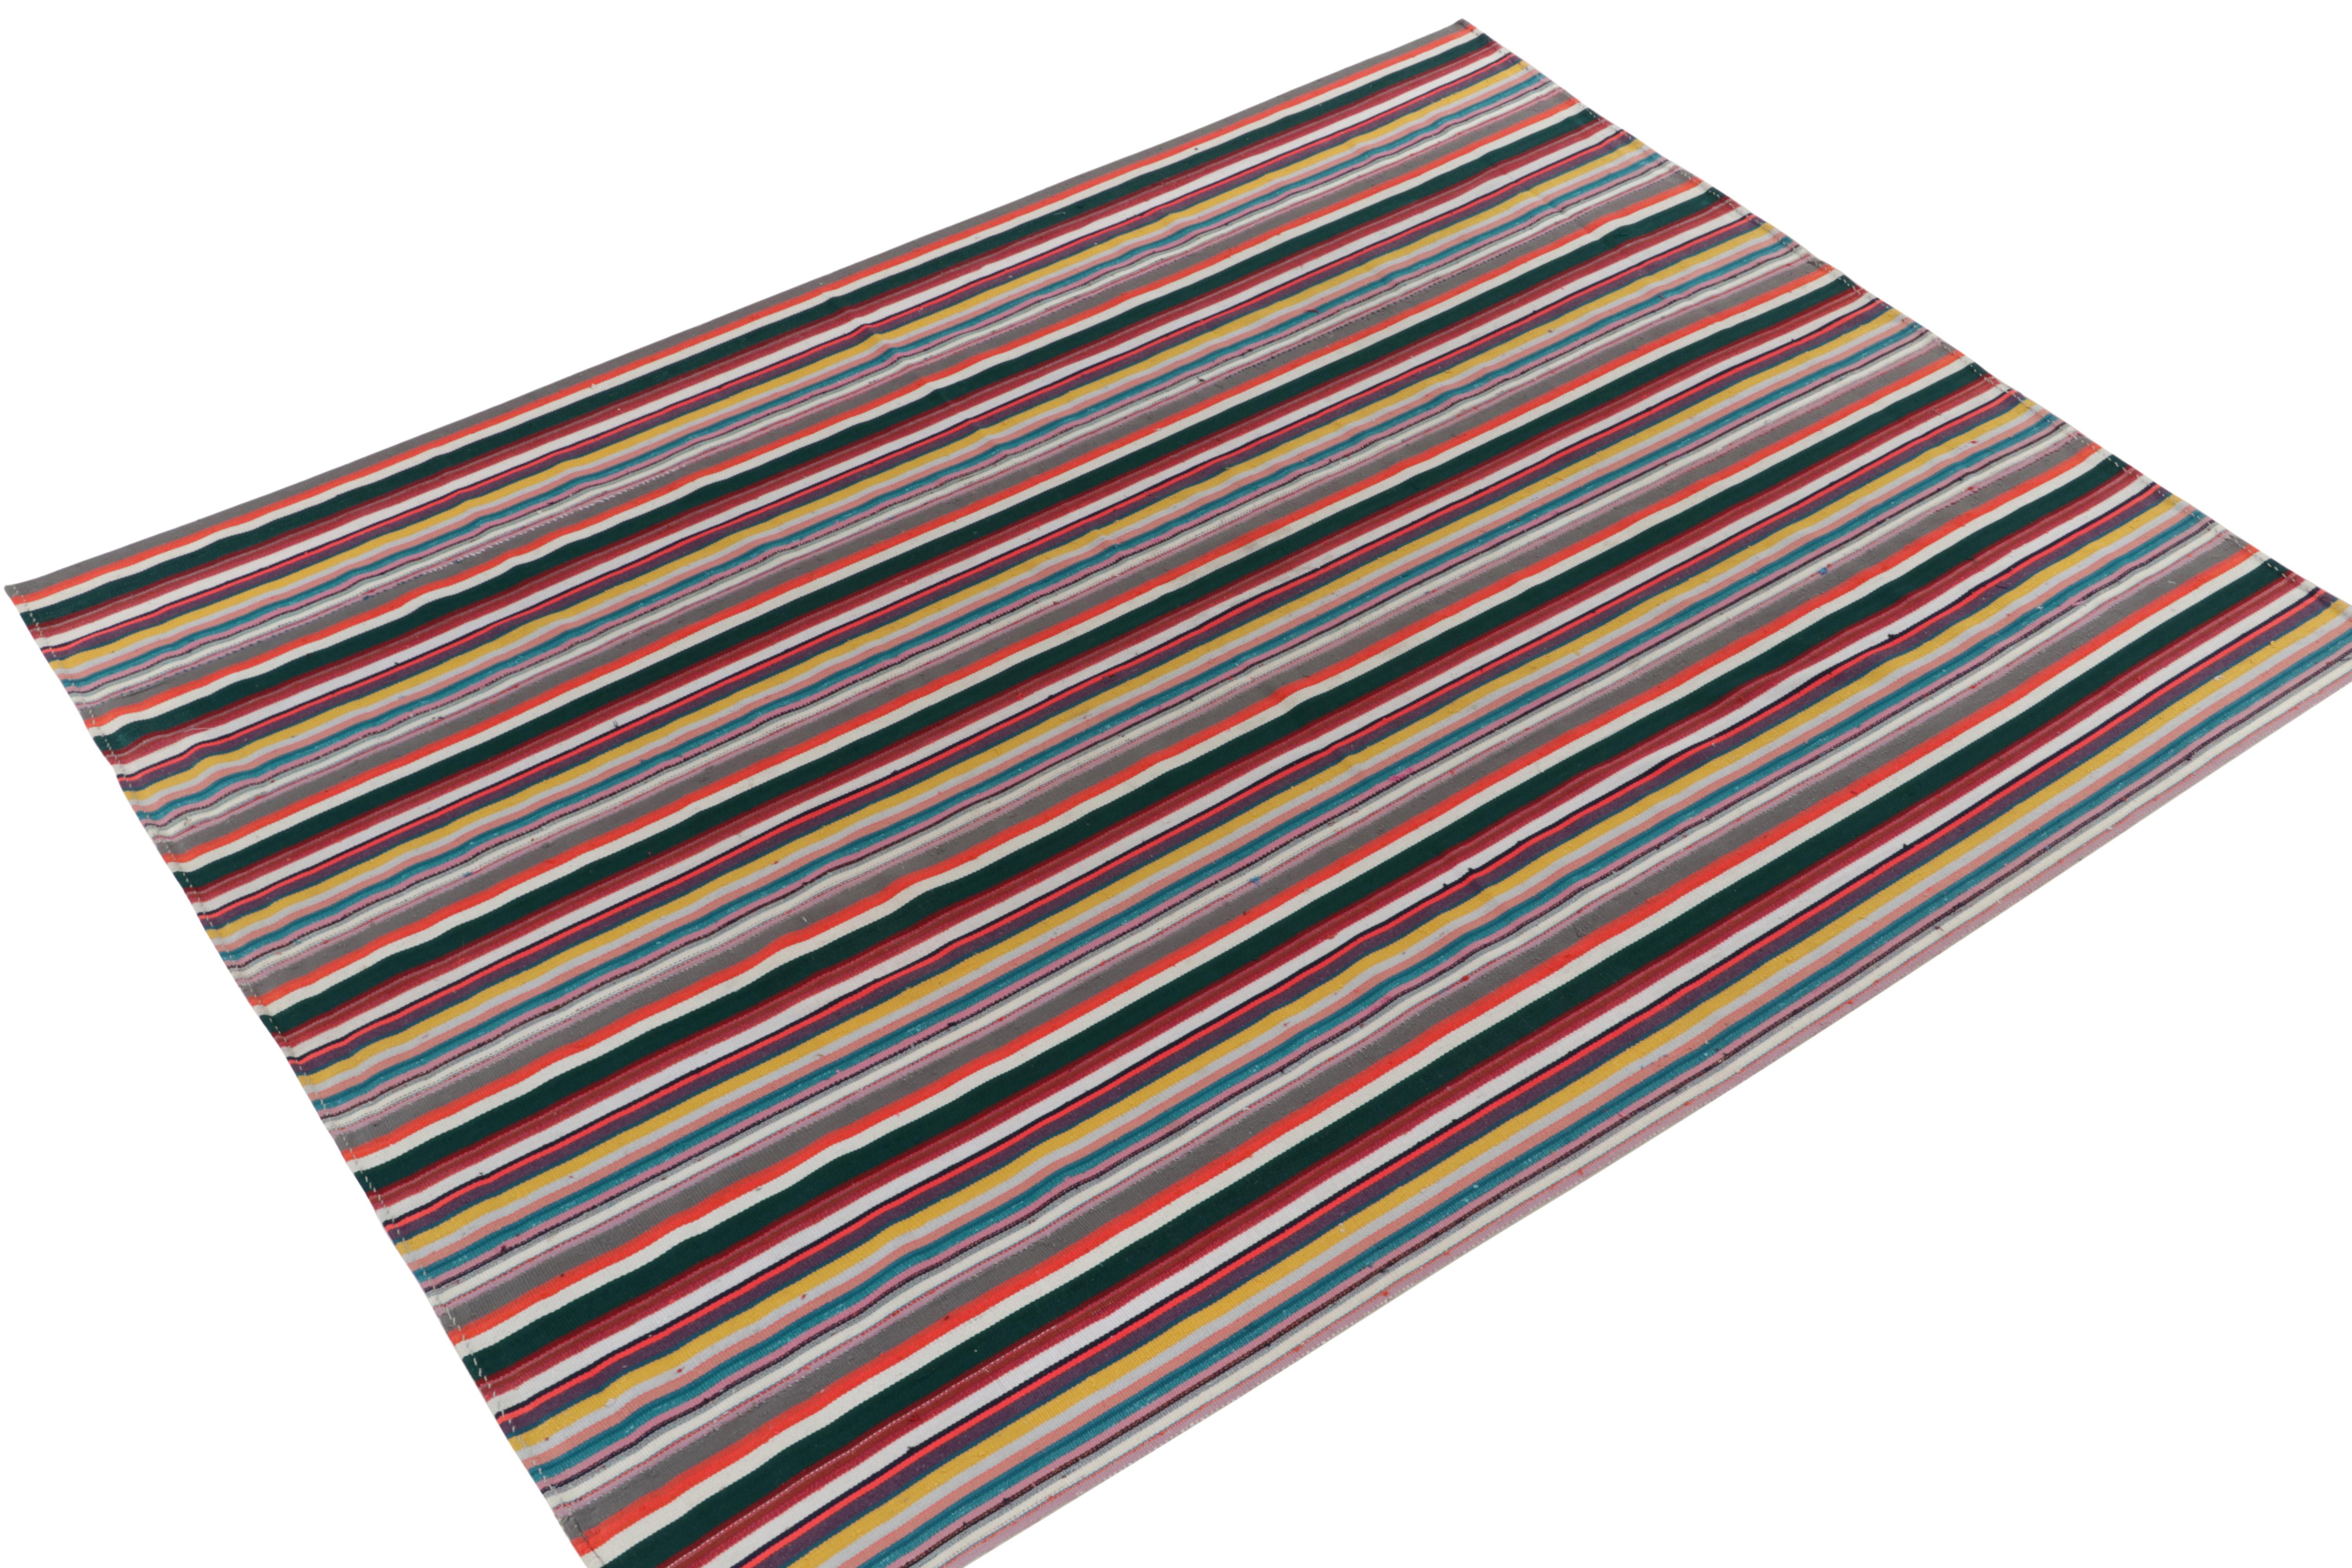 Turkish 1950s Vintage Chaput Kilim Rug in Multicolor Stripe Patterns, by Rug & Kilim For Sale